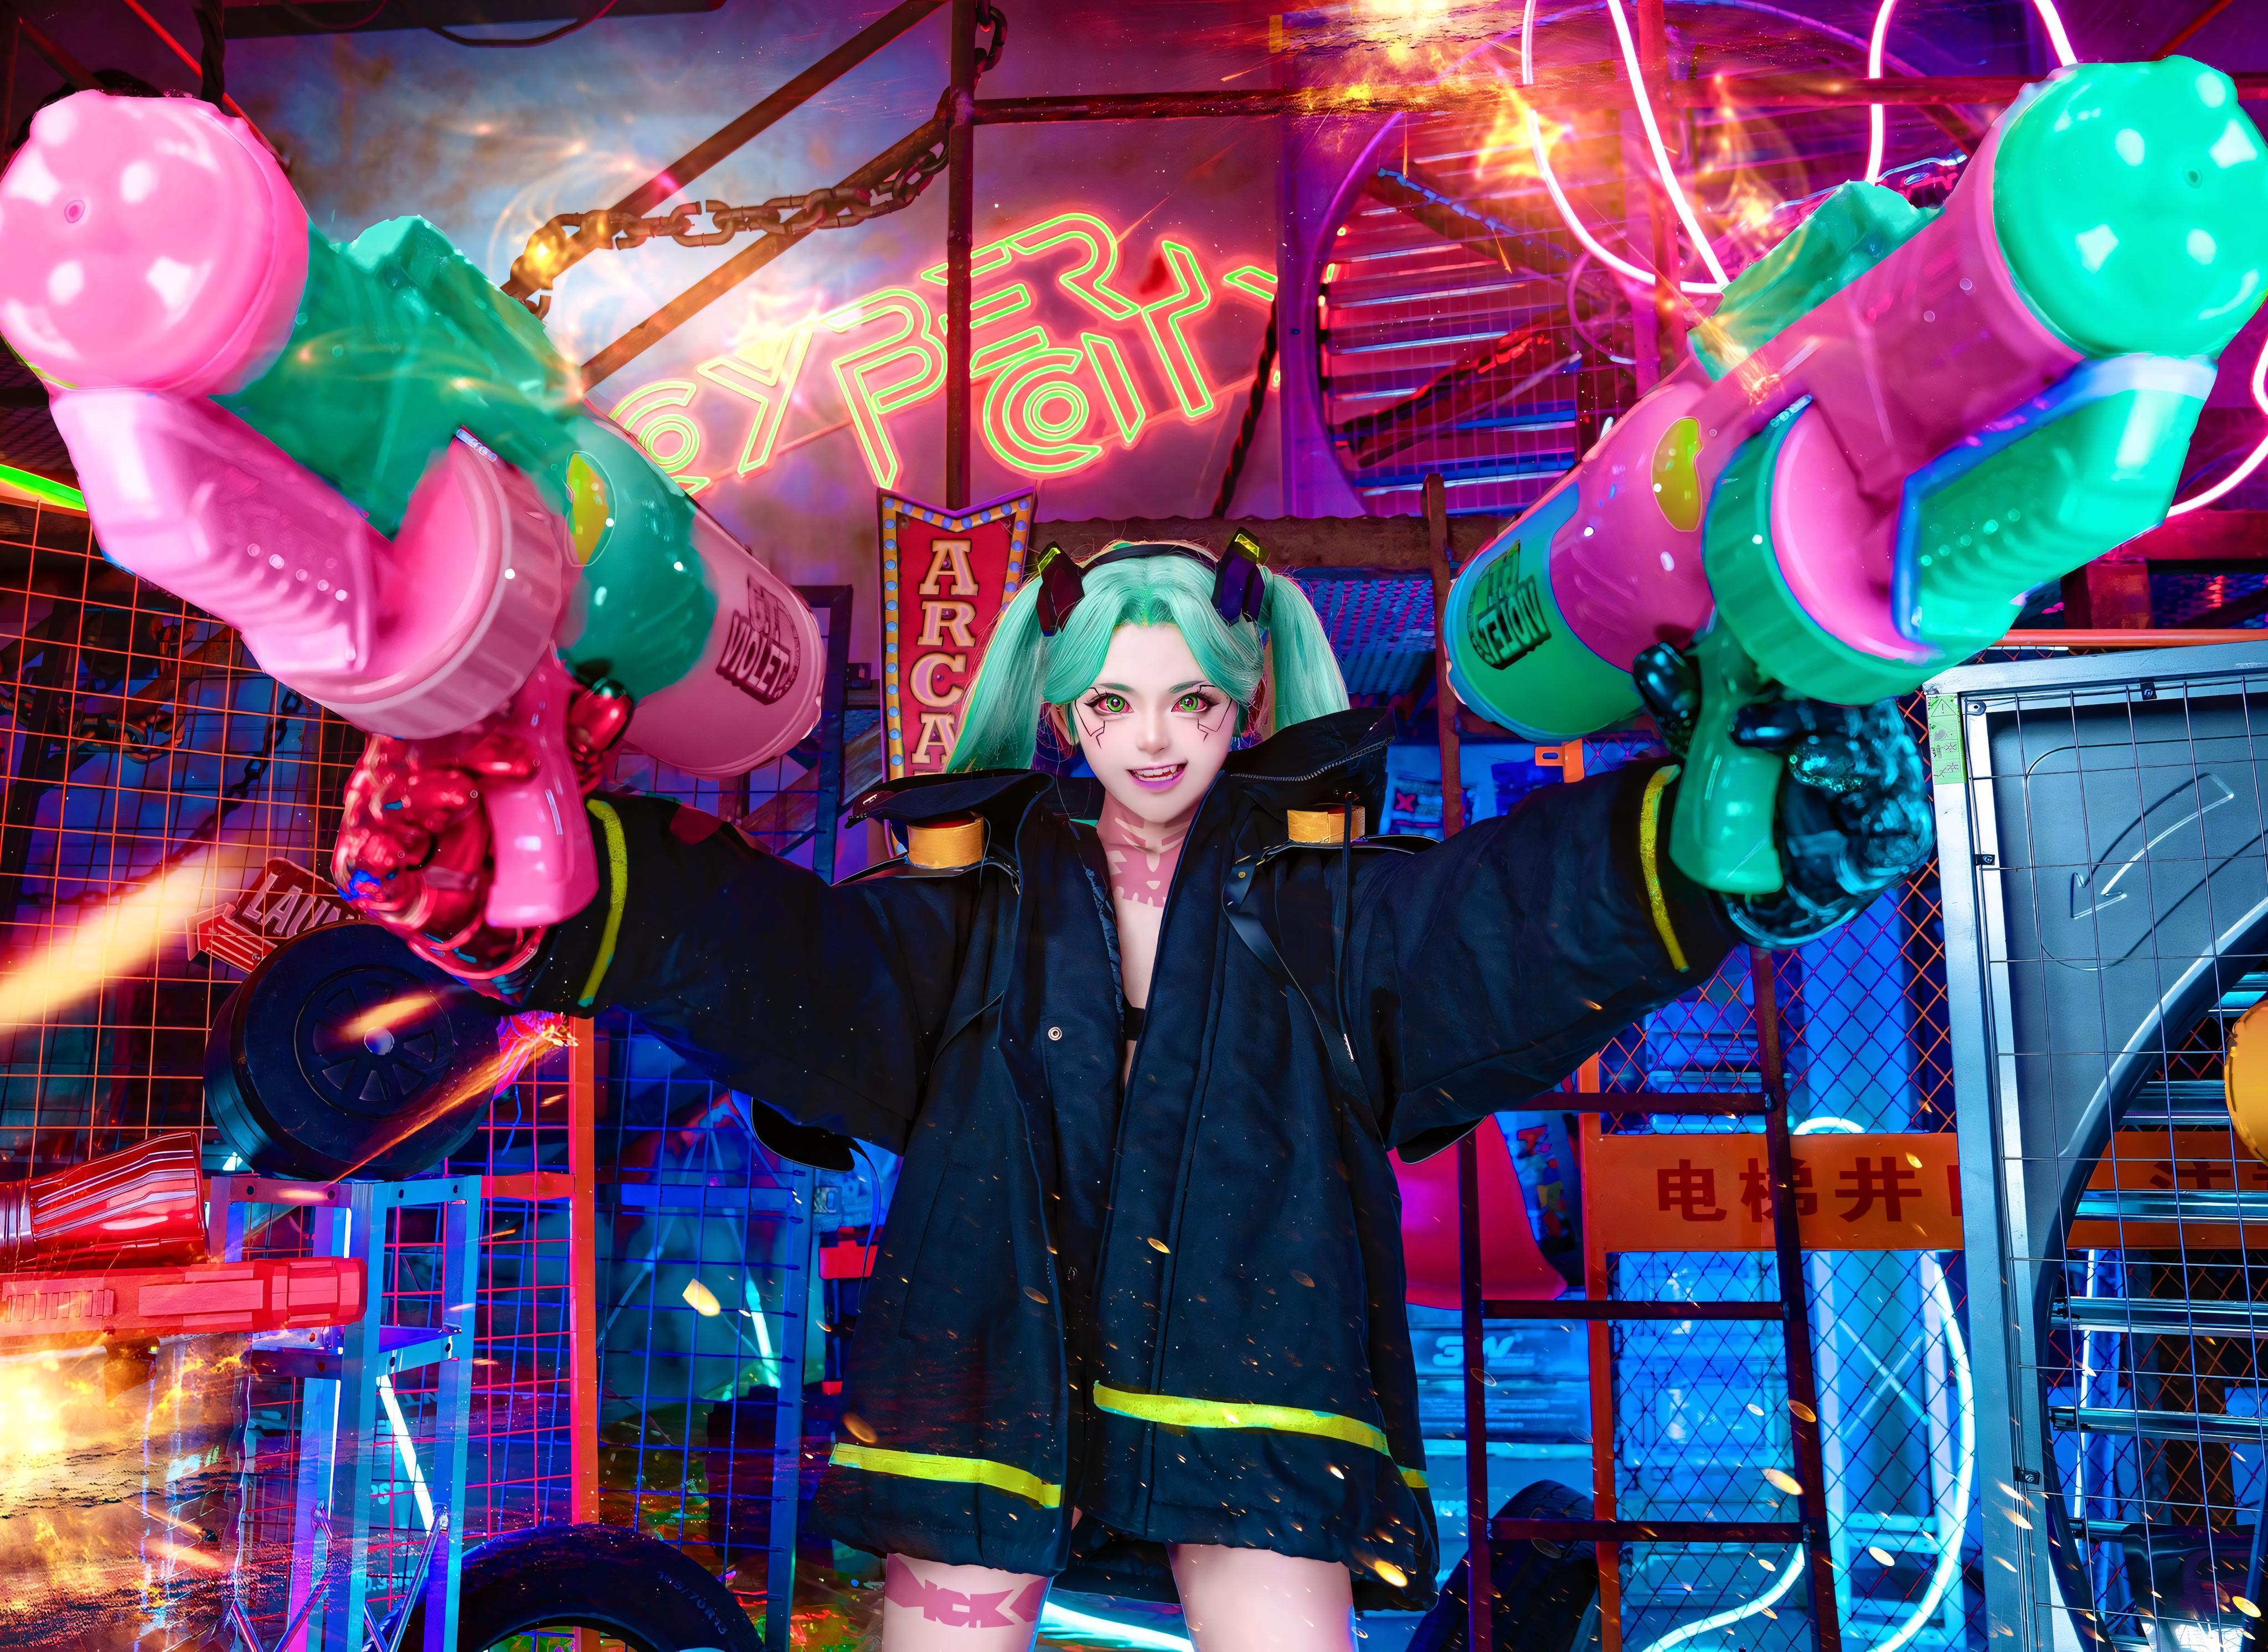 People 4096x2984 Seeuxiaorou cosplay photoshopped Cyberpunk 2077 Rebecca (Cyberpunk: Edgerunners) smiling holding gun oversized outfit green hair long hair twintails Asian